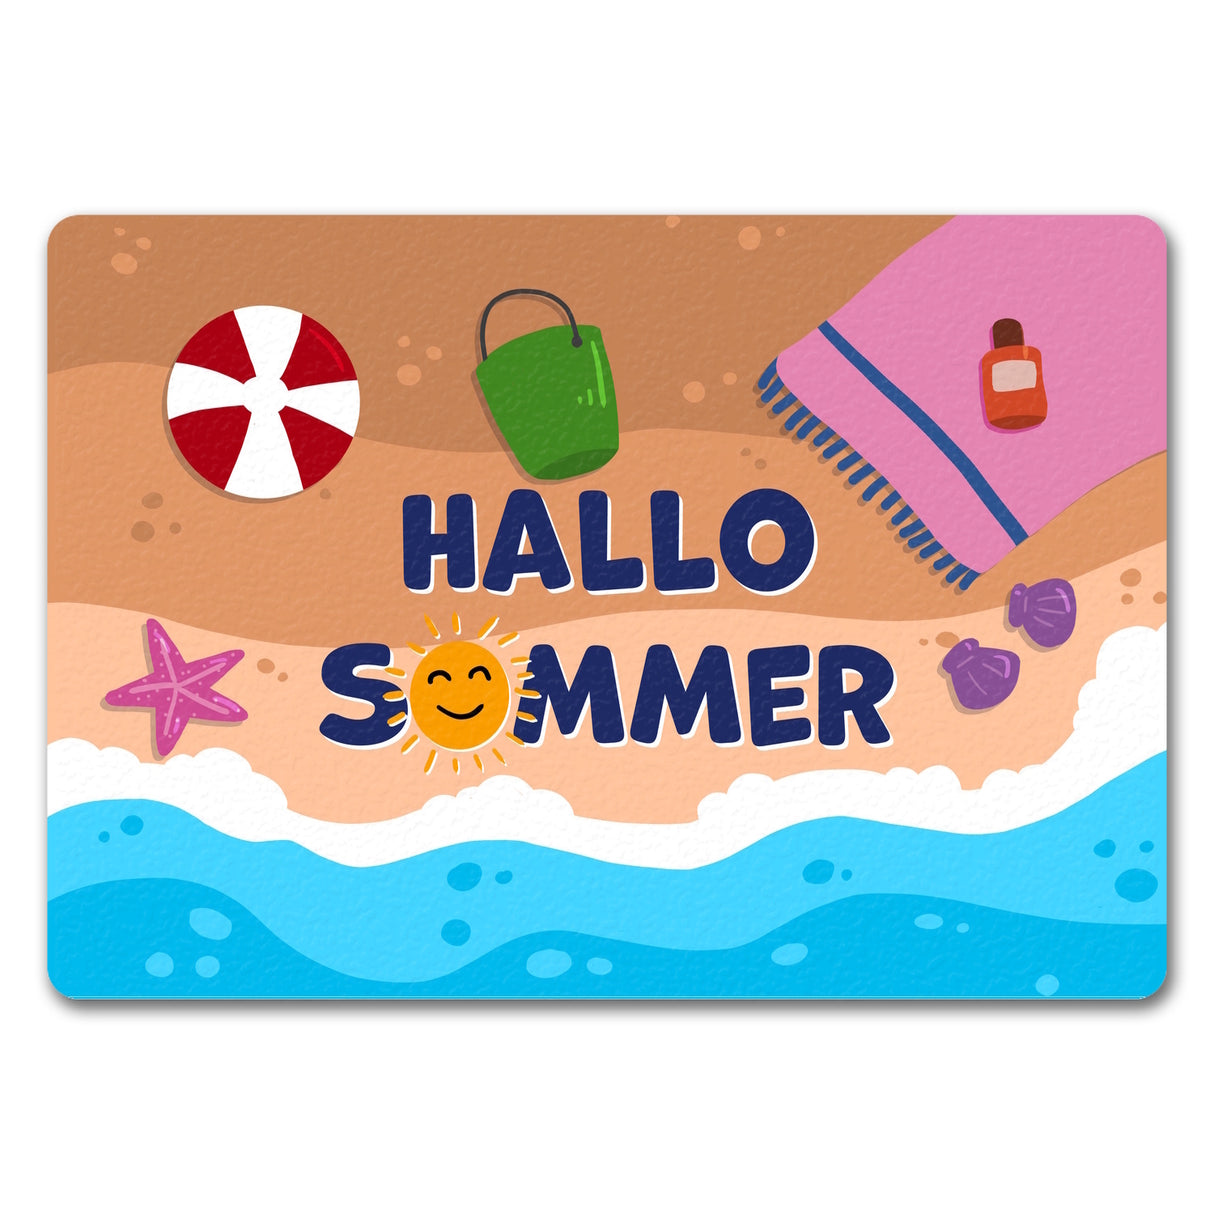 Hallo Sommer Fußmatte mit Strandmotiv